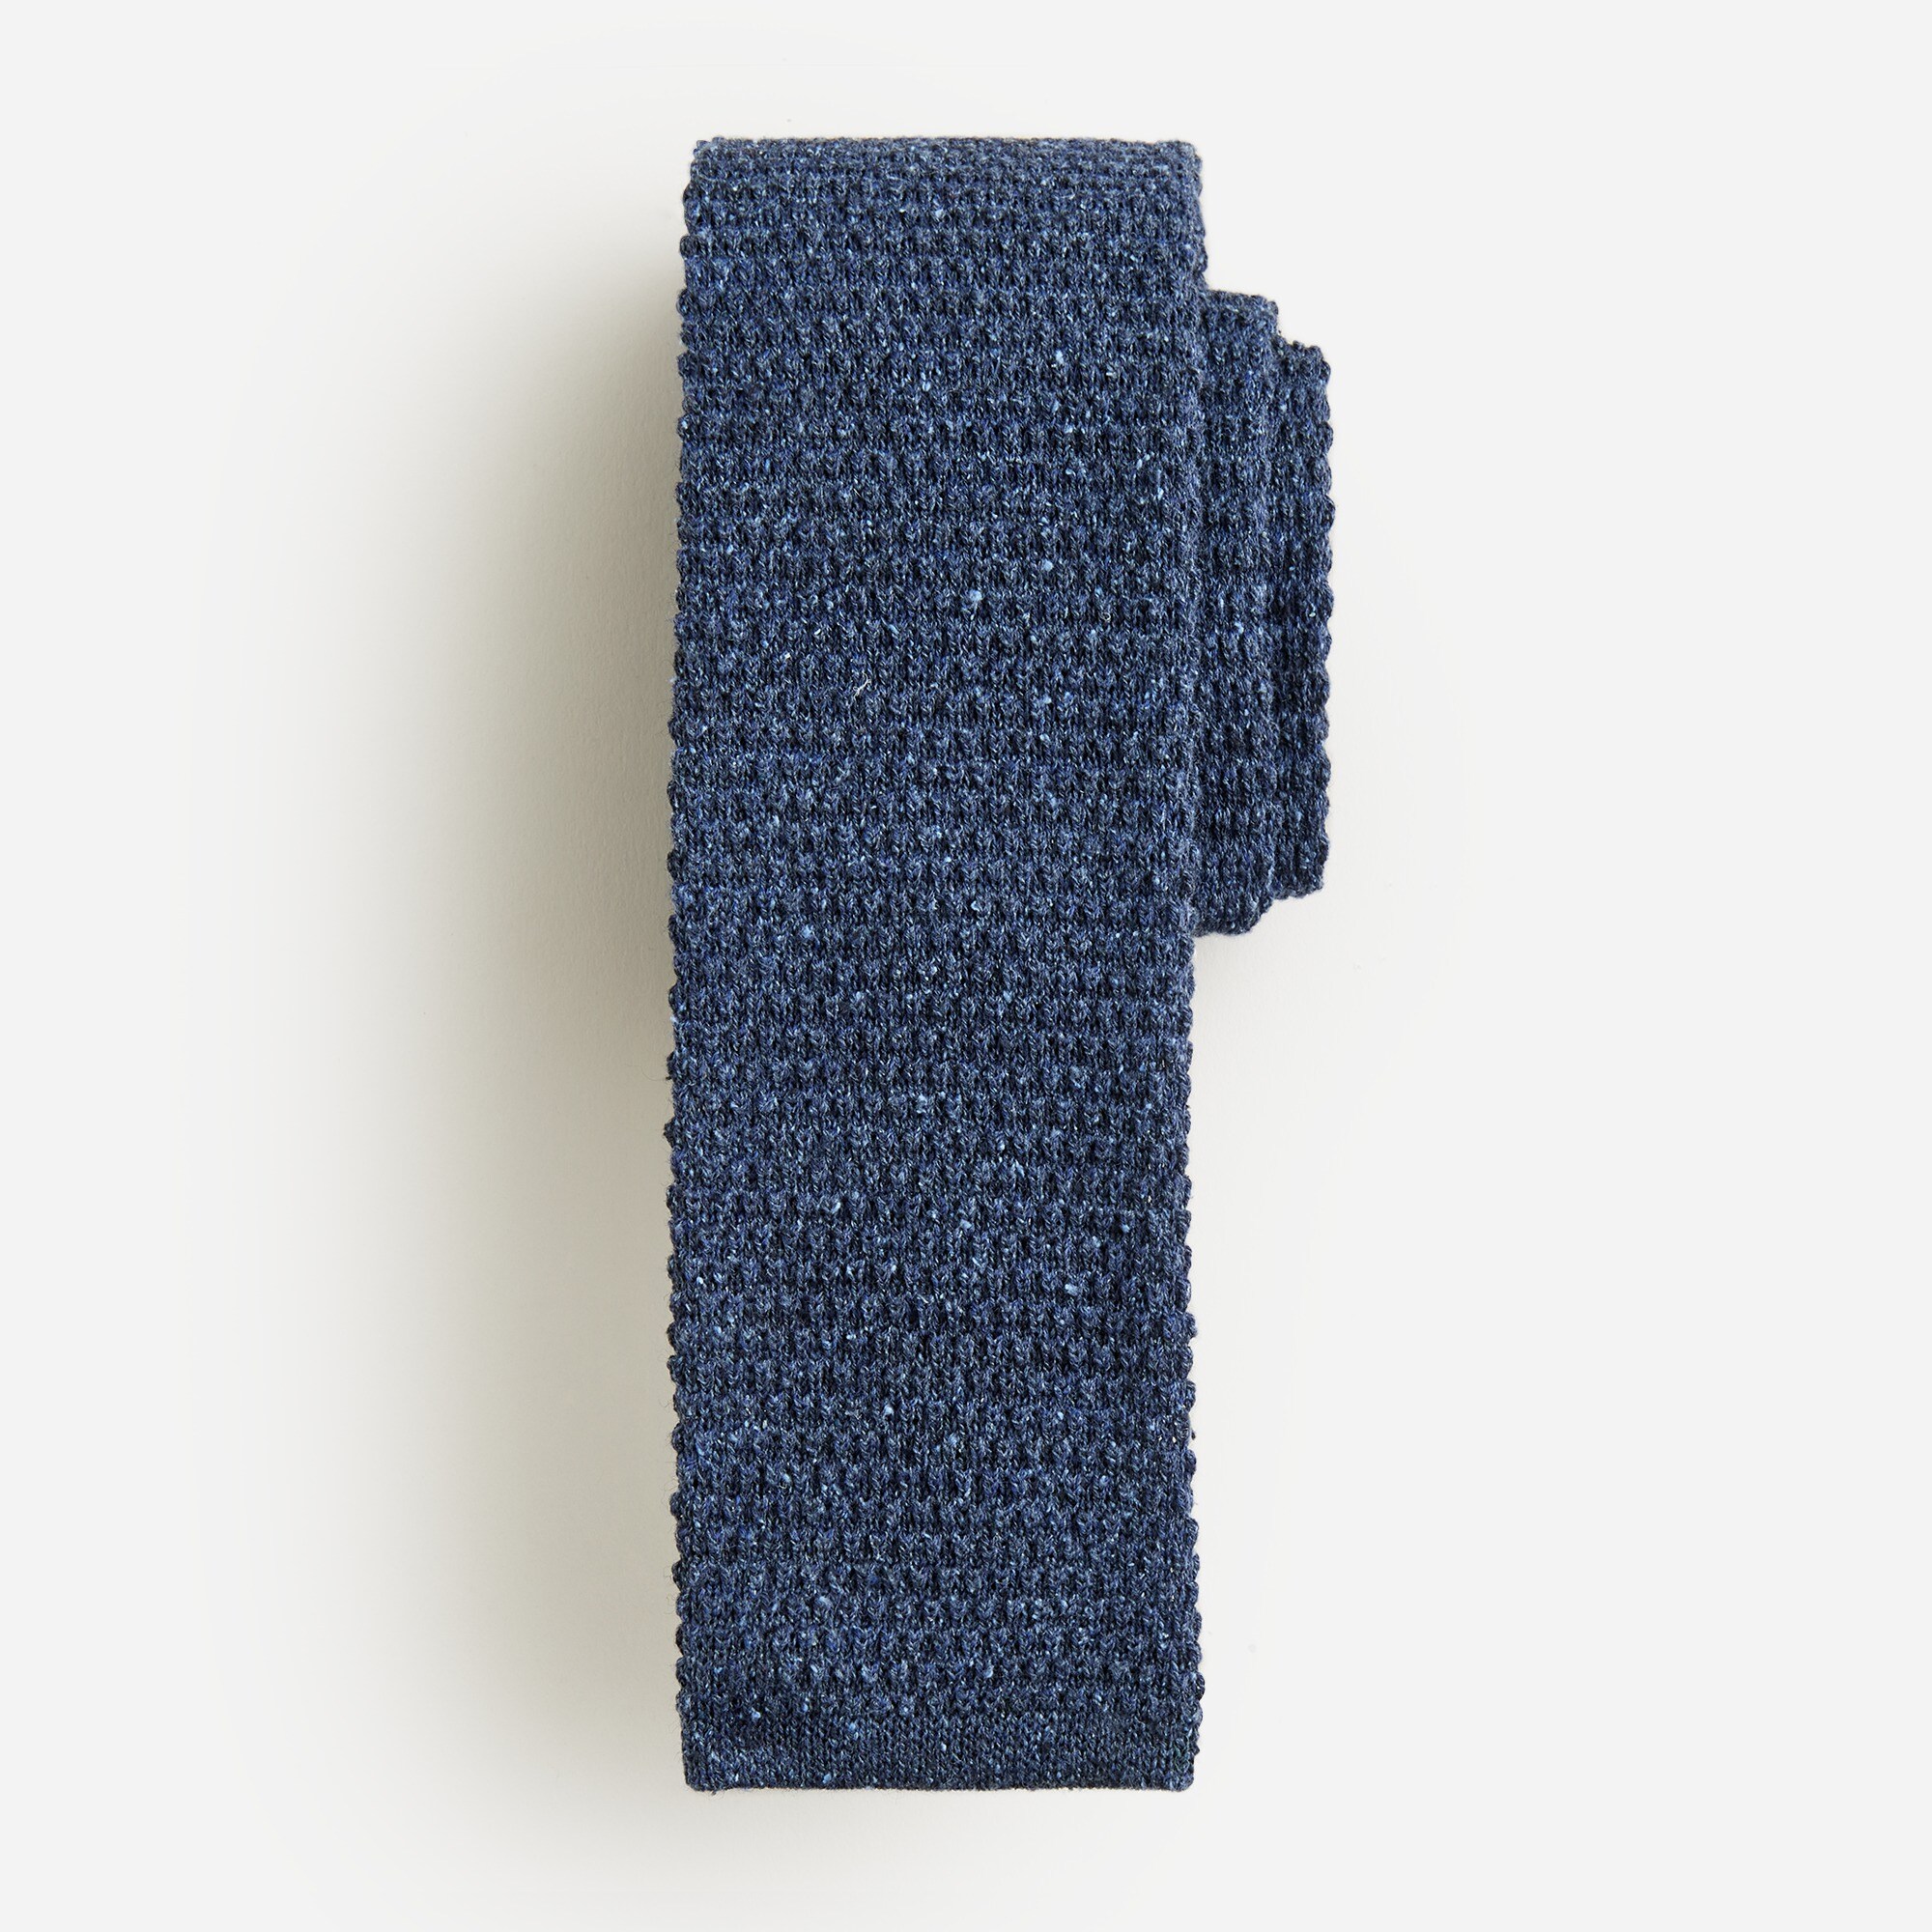  Wool-silk blend melange knit tie